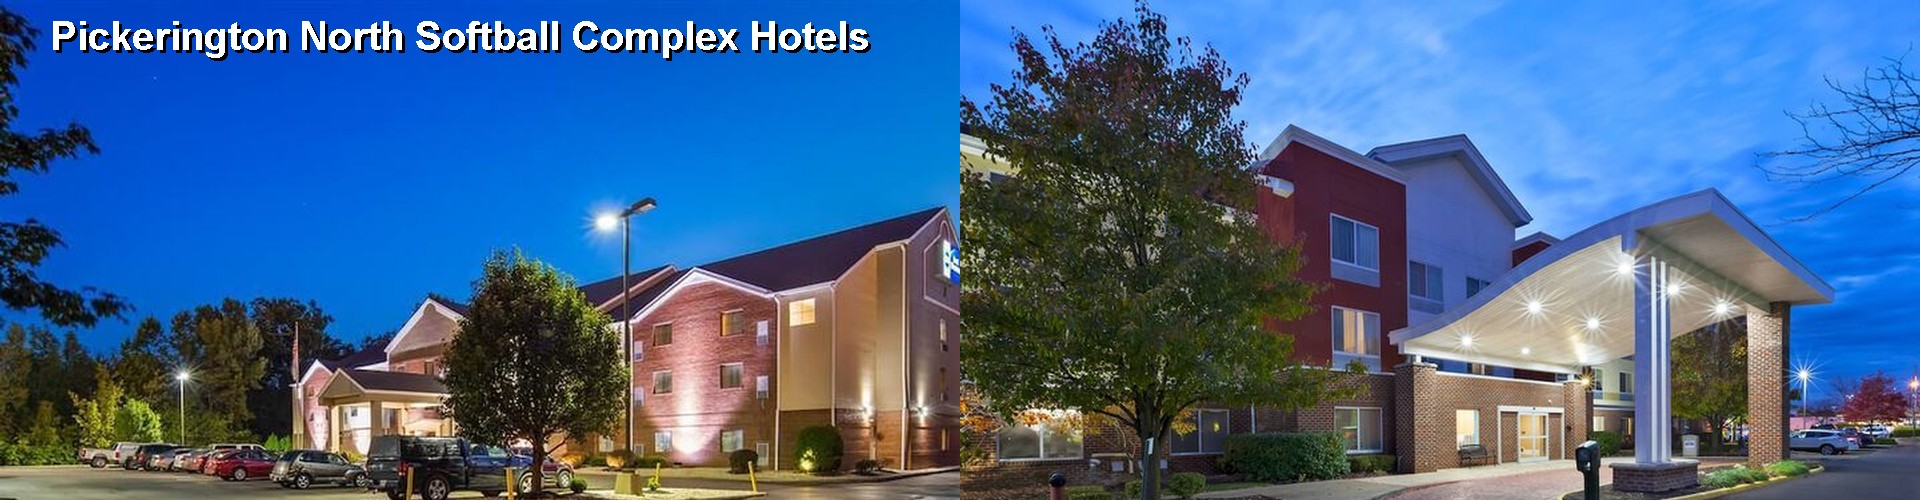 3 Best Hotels near Pickerington North Softball Complex